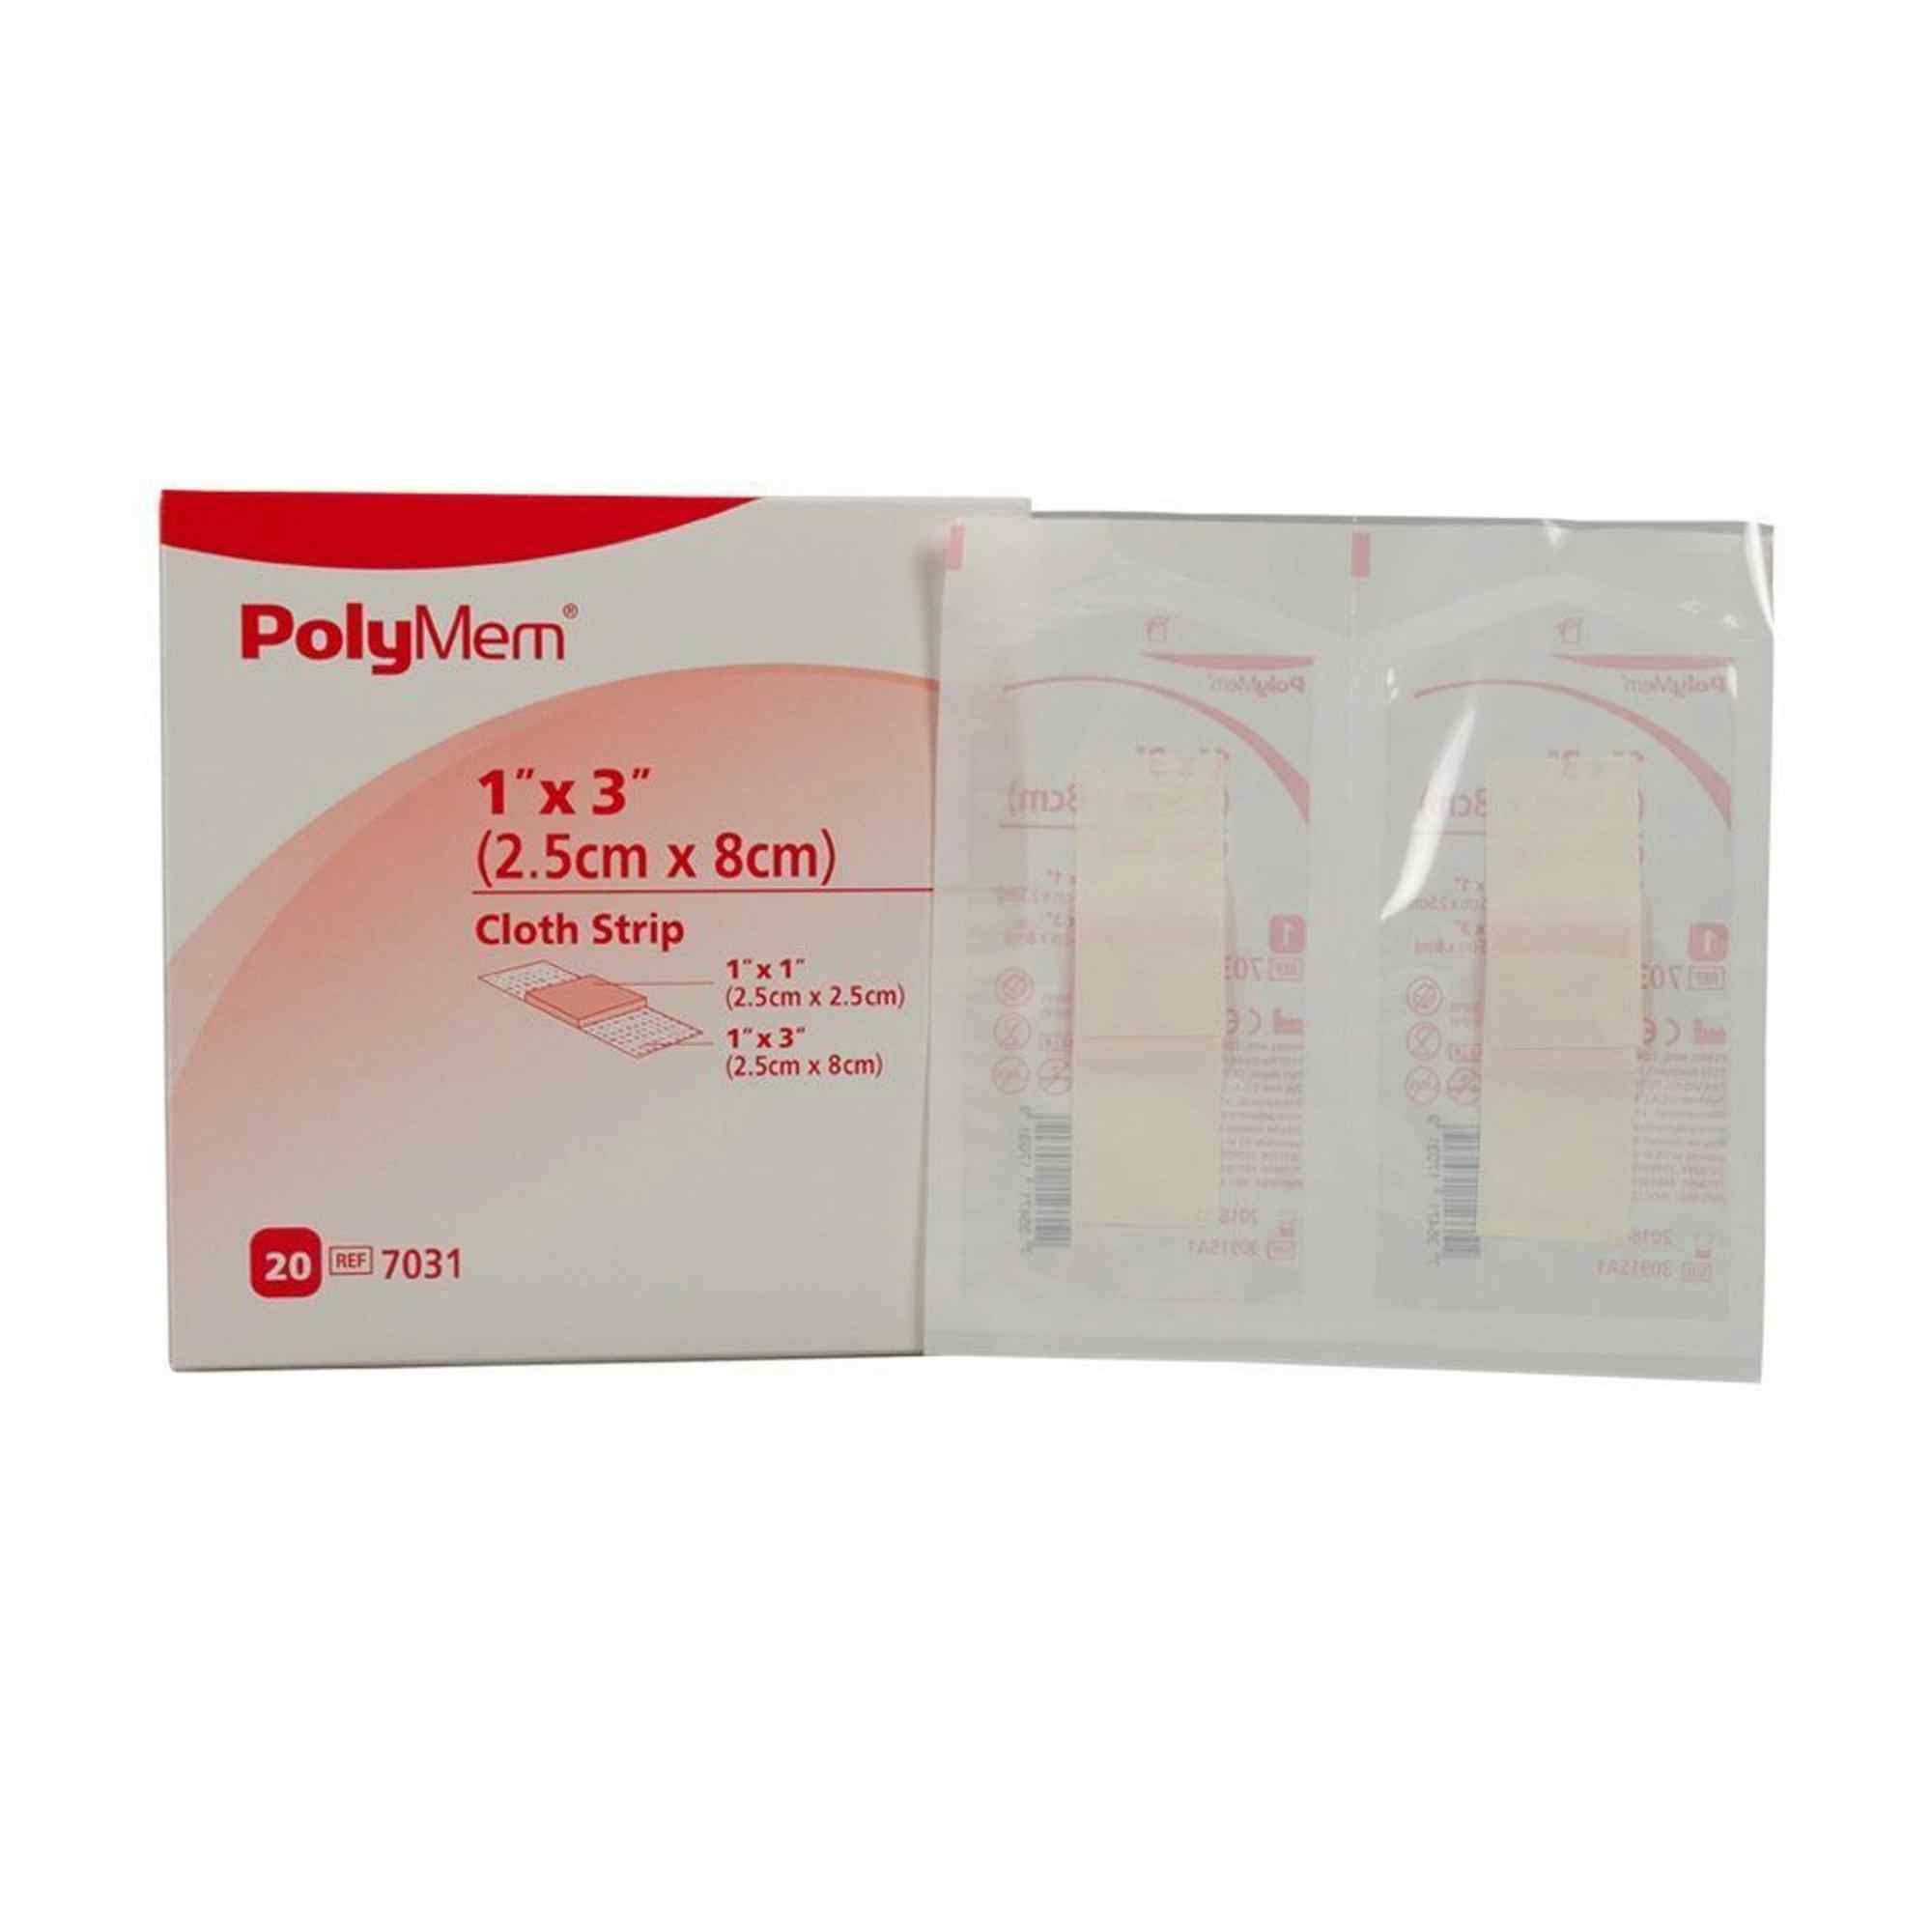 PolyMem Adhesive Strip, 1 X 3", 7031, Box of 20